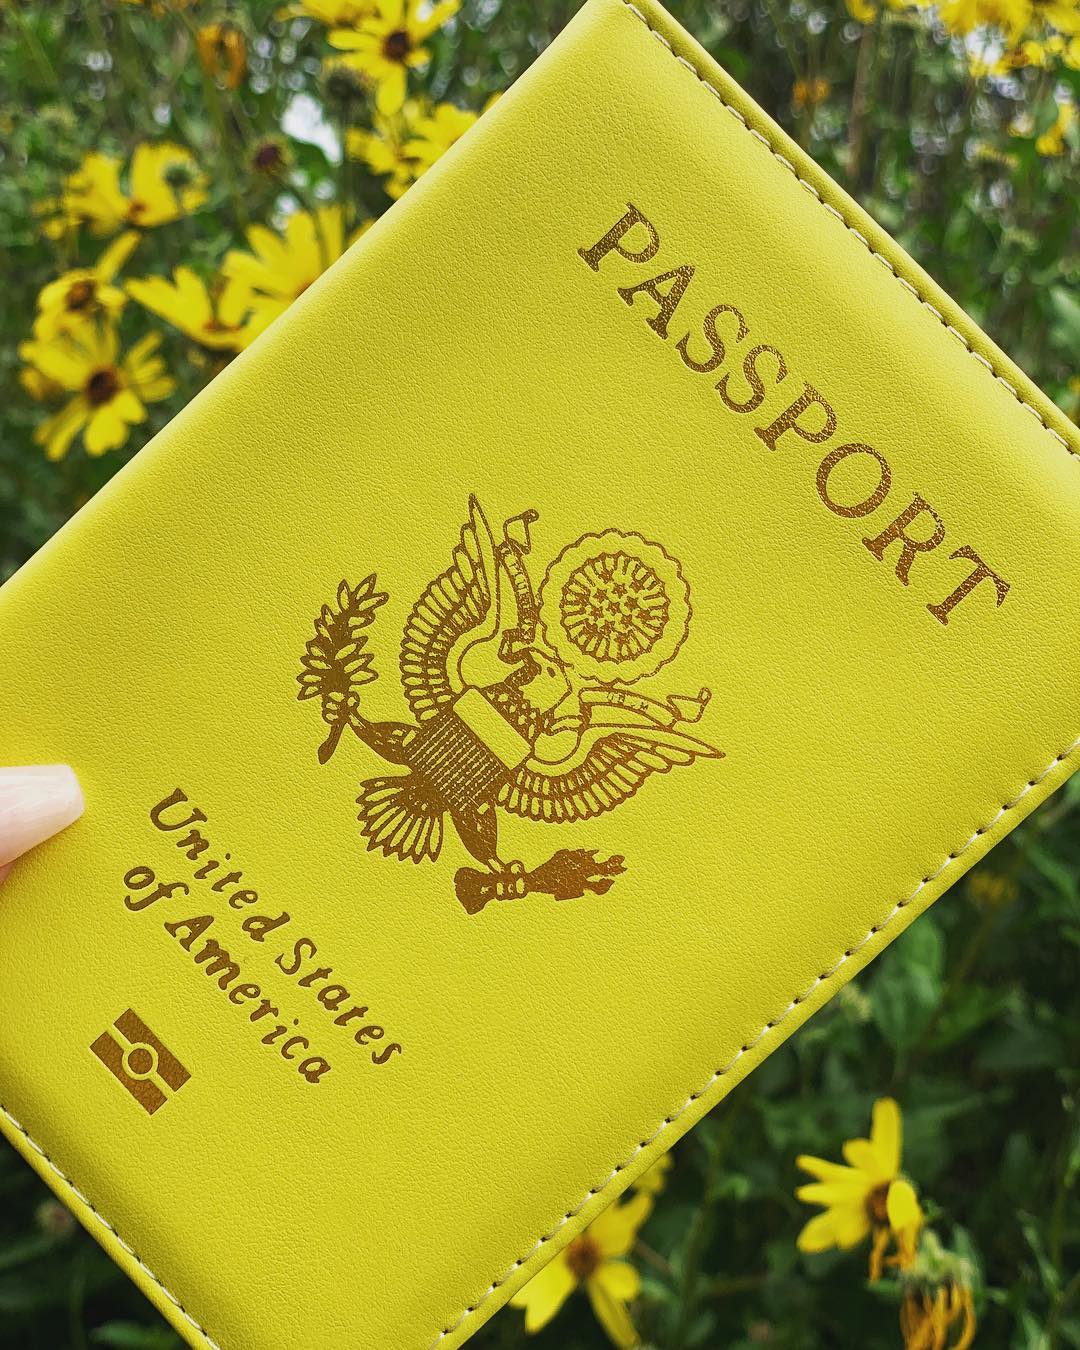 Girl holding a yellow passport. Photo by Instagram user @prettylittlepassports